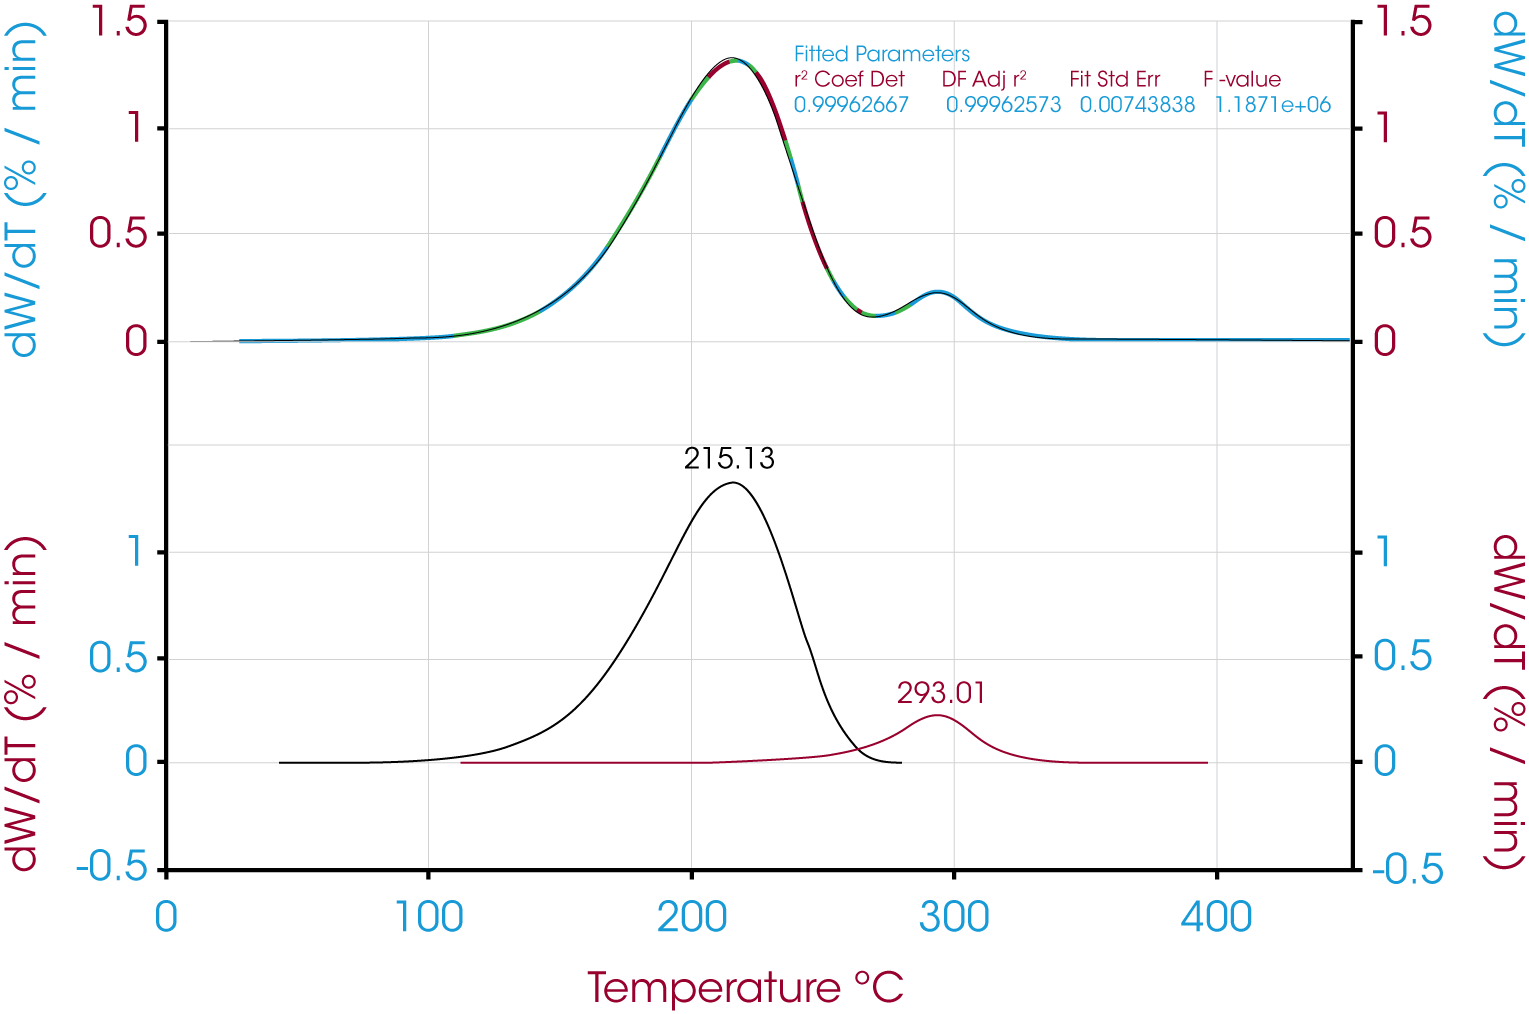 Figure 6. Deconvolution of Derivative of Mass Loss for Oil ‘A’ Using Pearson IV Model